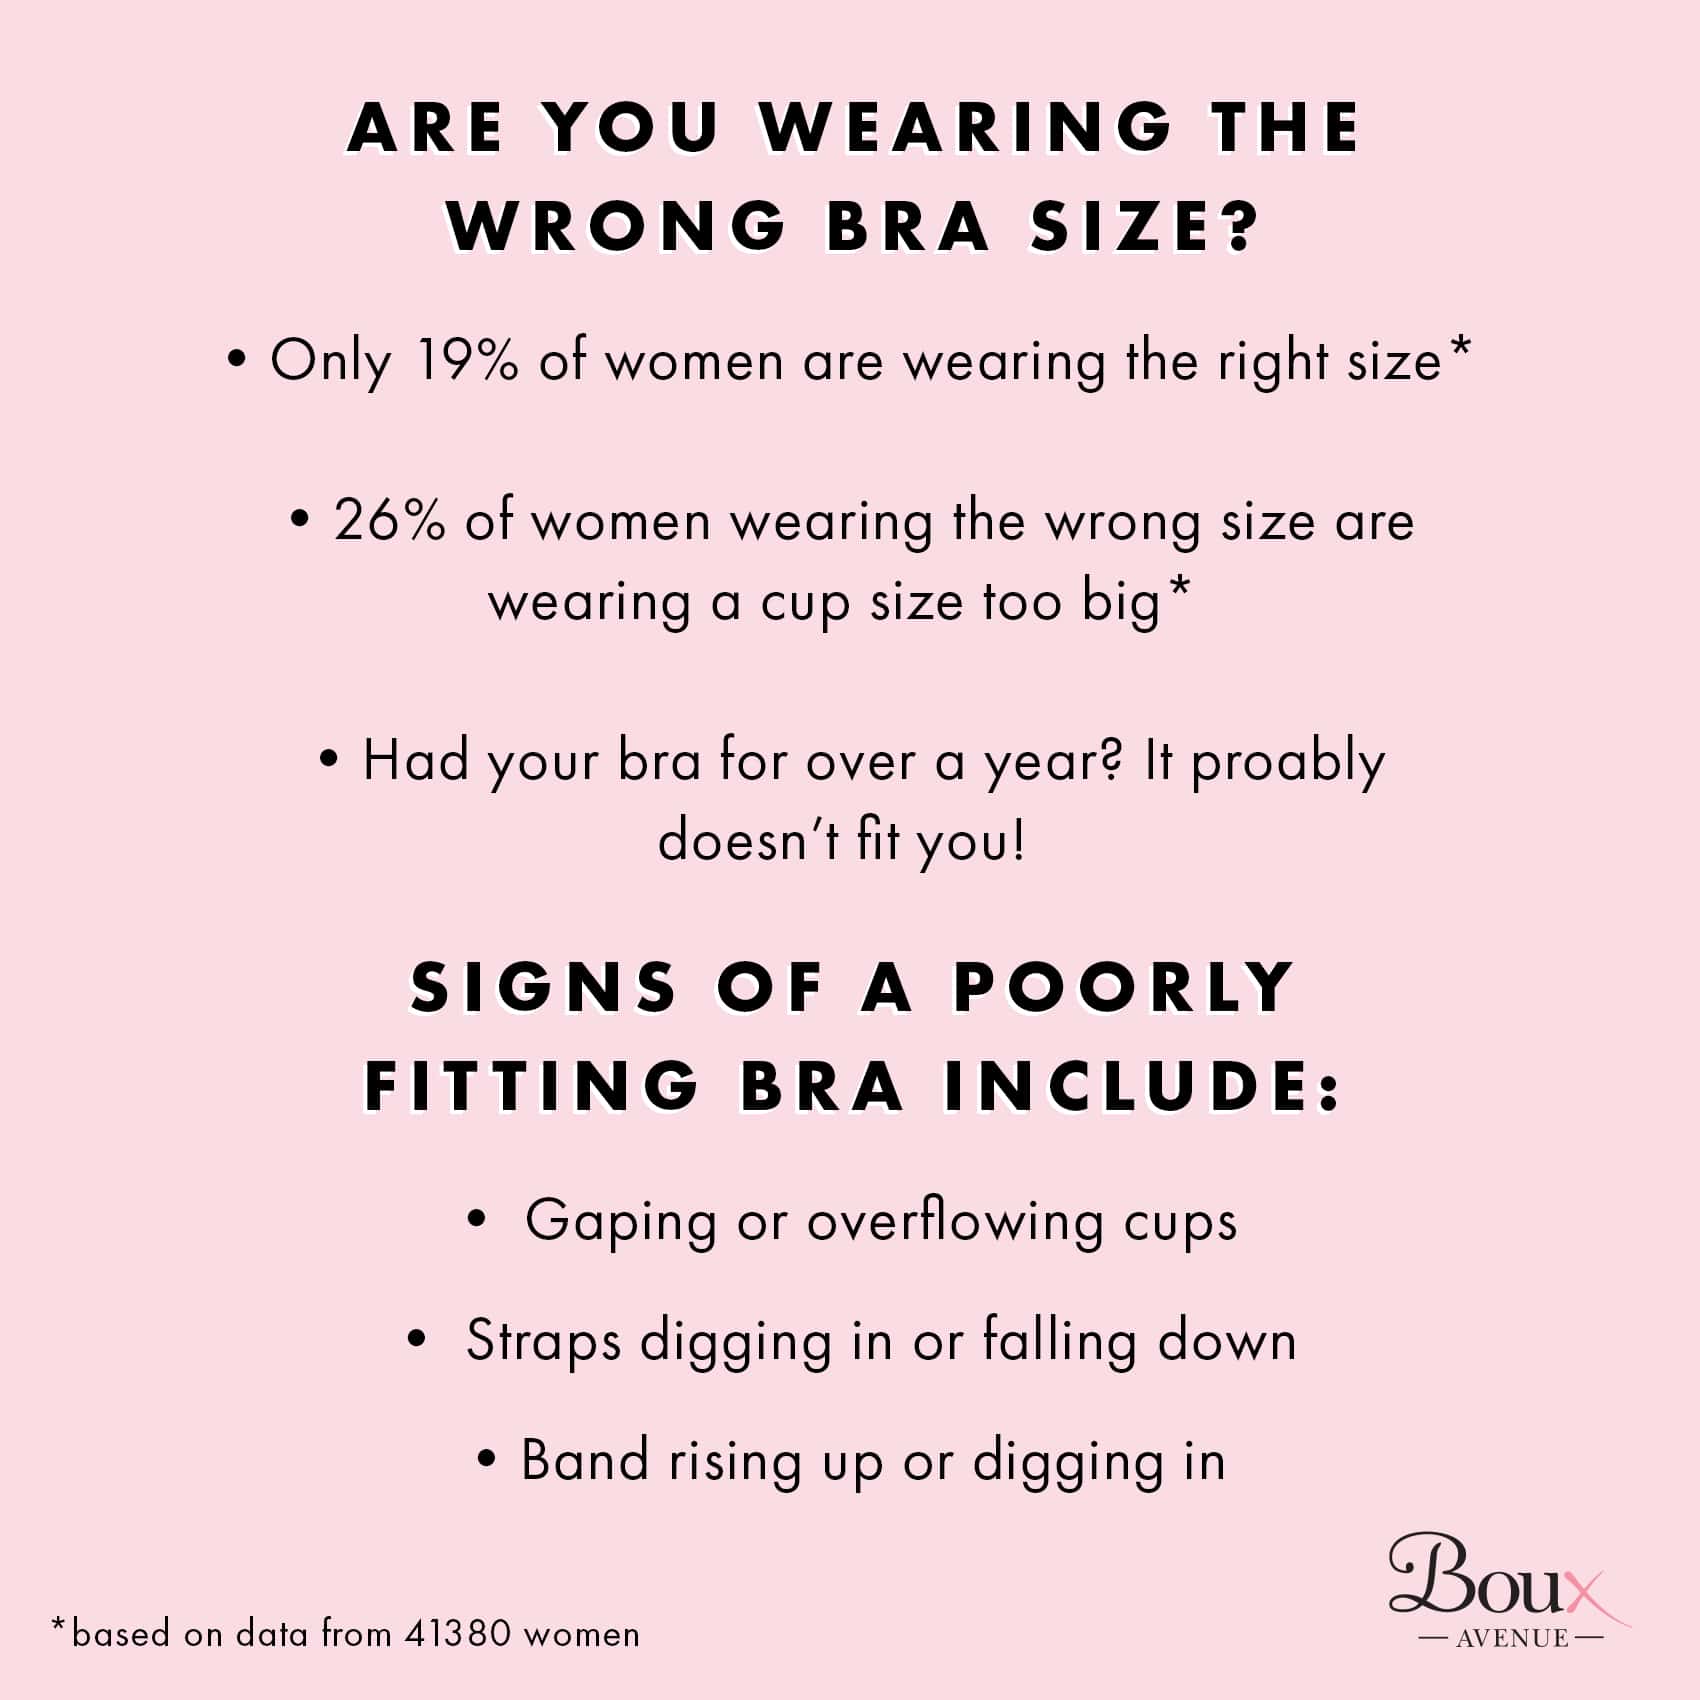 bra sizes chart - Ygraph